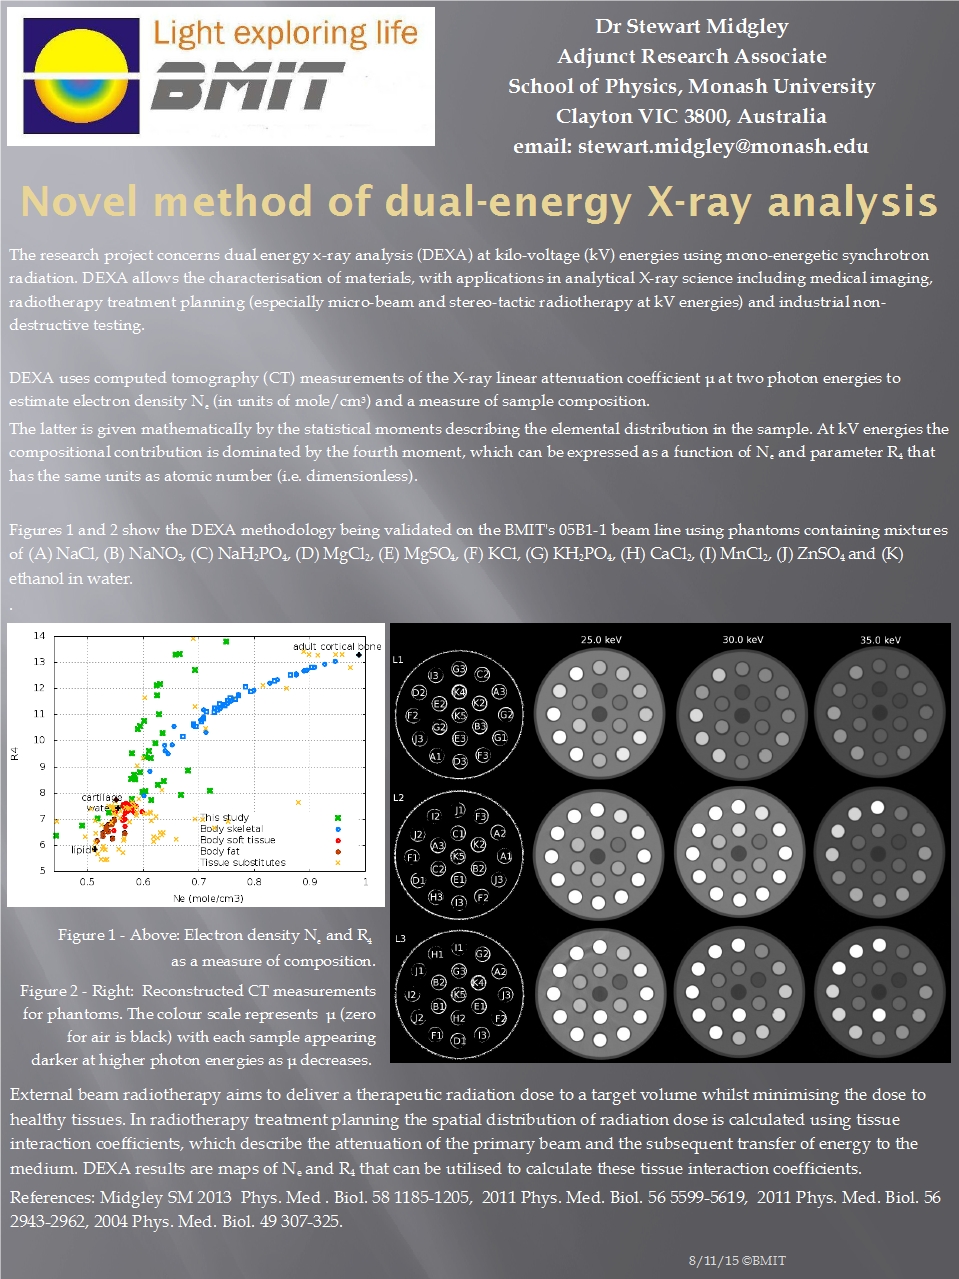 Novel Method of Dual-Energy X-Ray Analysis Image